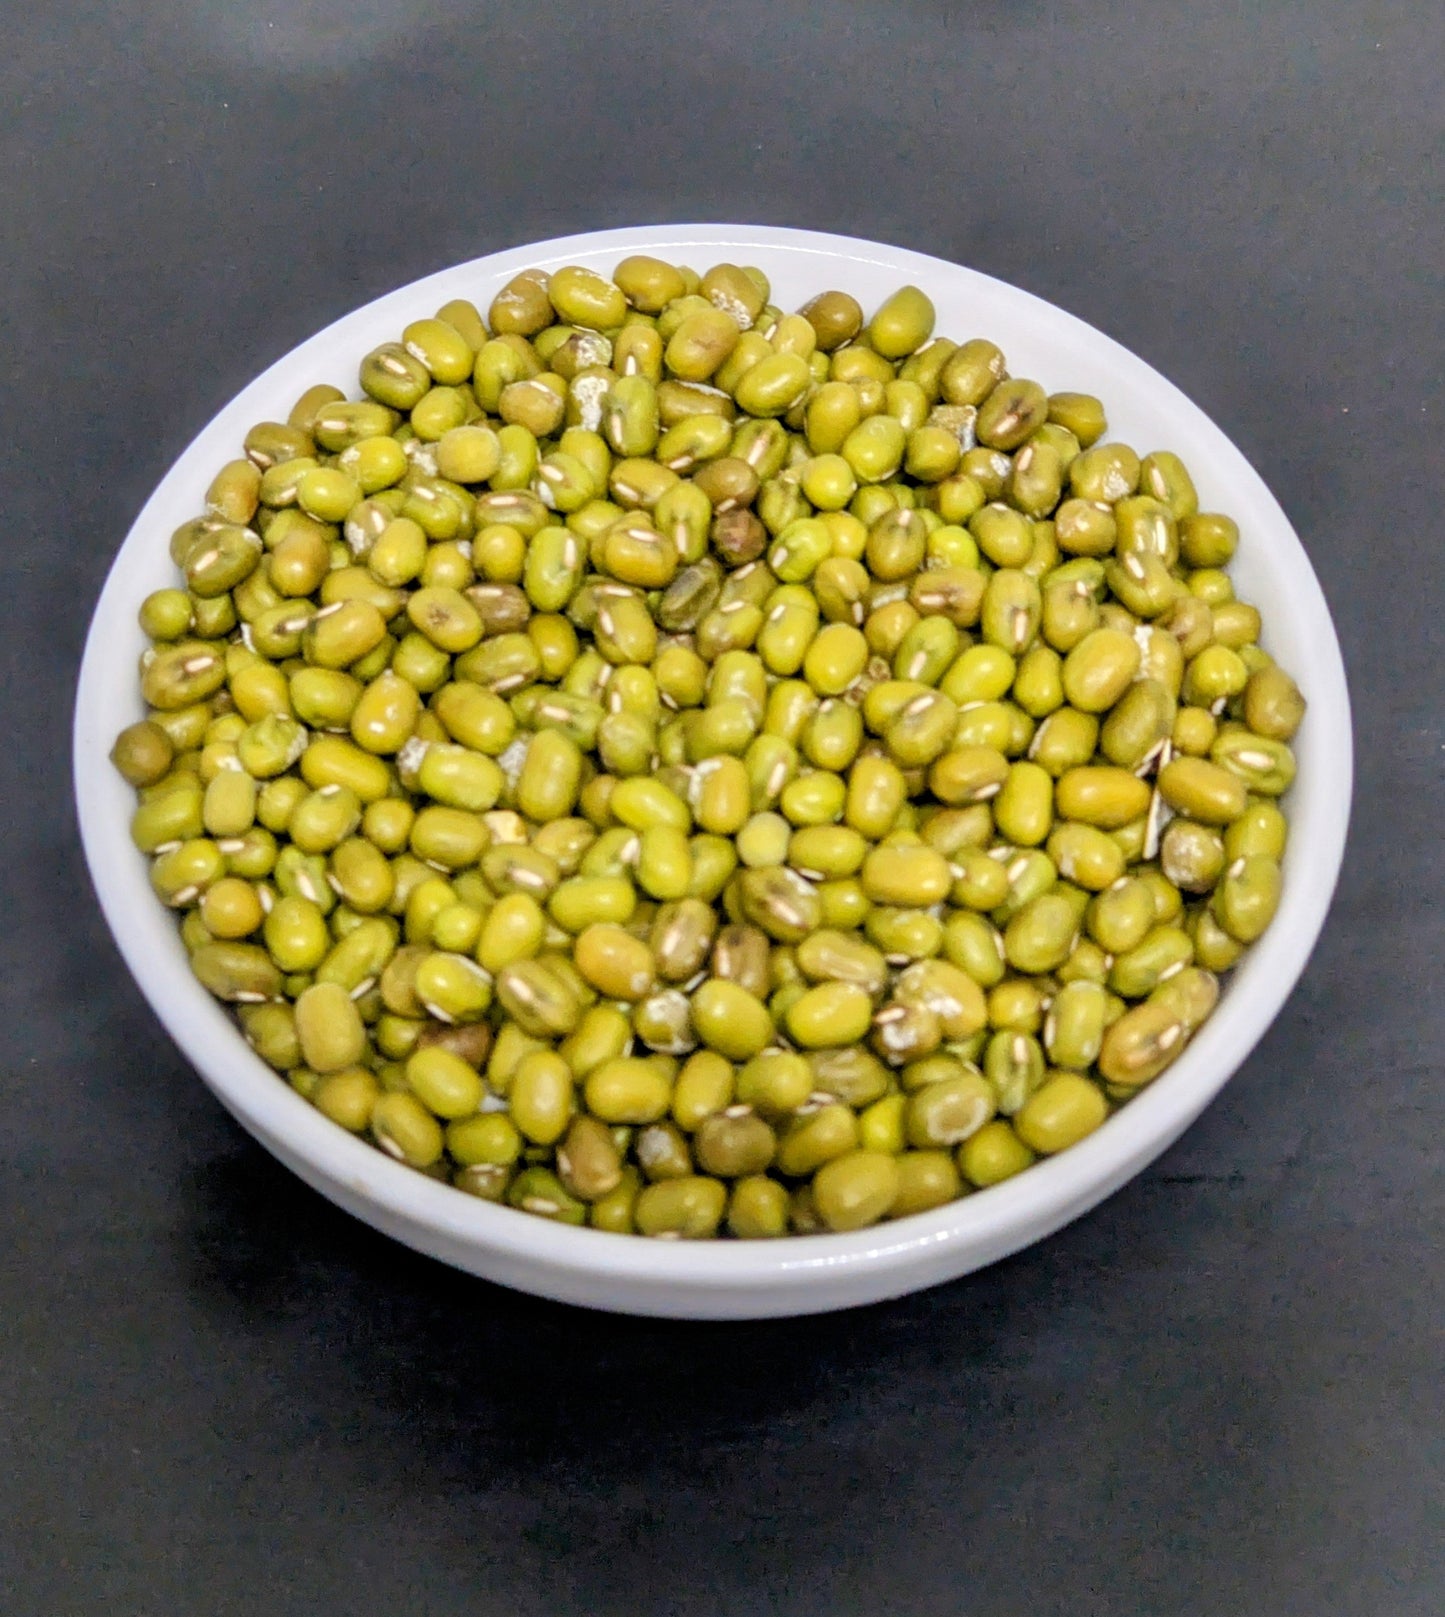 1kg+ Mung Bean for Sprouting seeds Microgreens Green Salad Healthy Organic Super Food | Ceylon  Organic-4